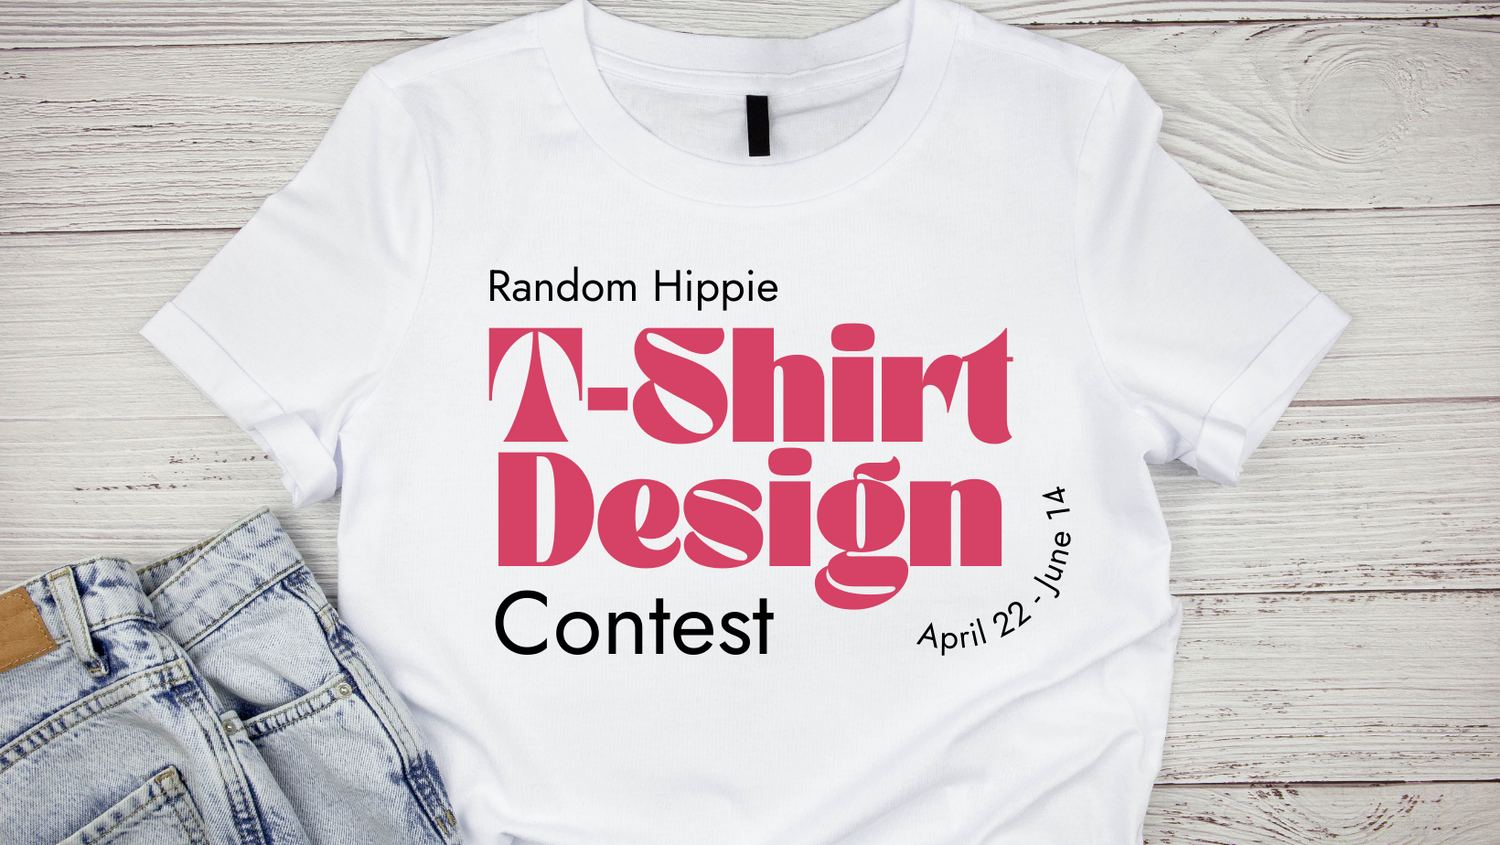 Random Hippie T-Shirt Design Contest Official Rules